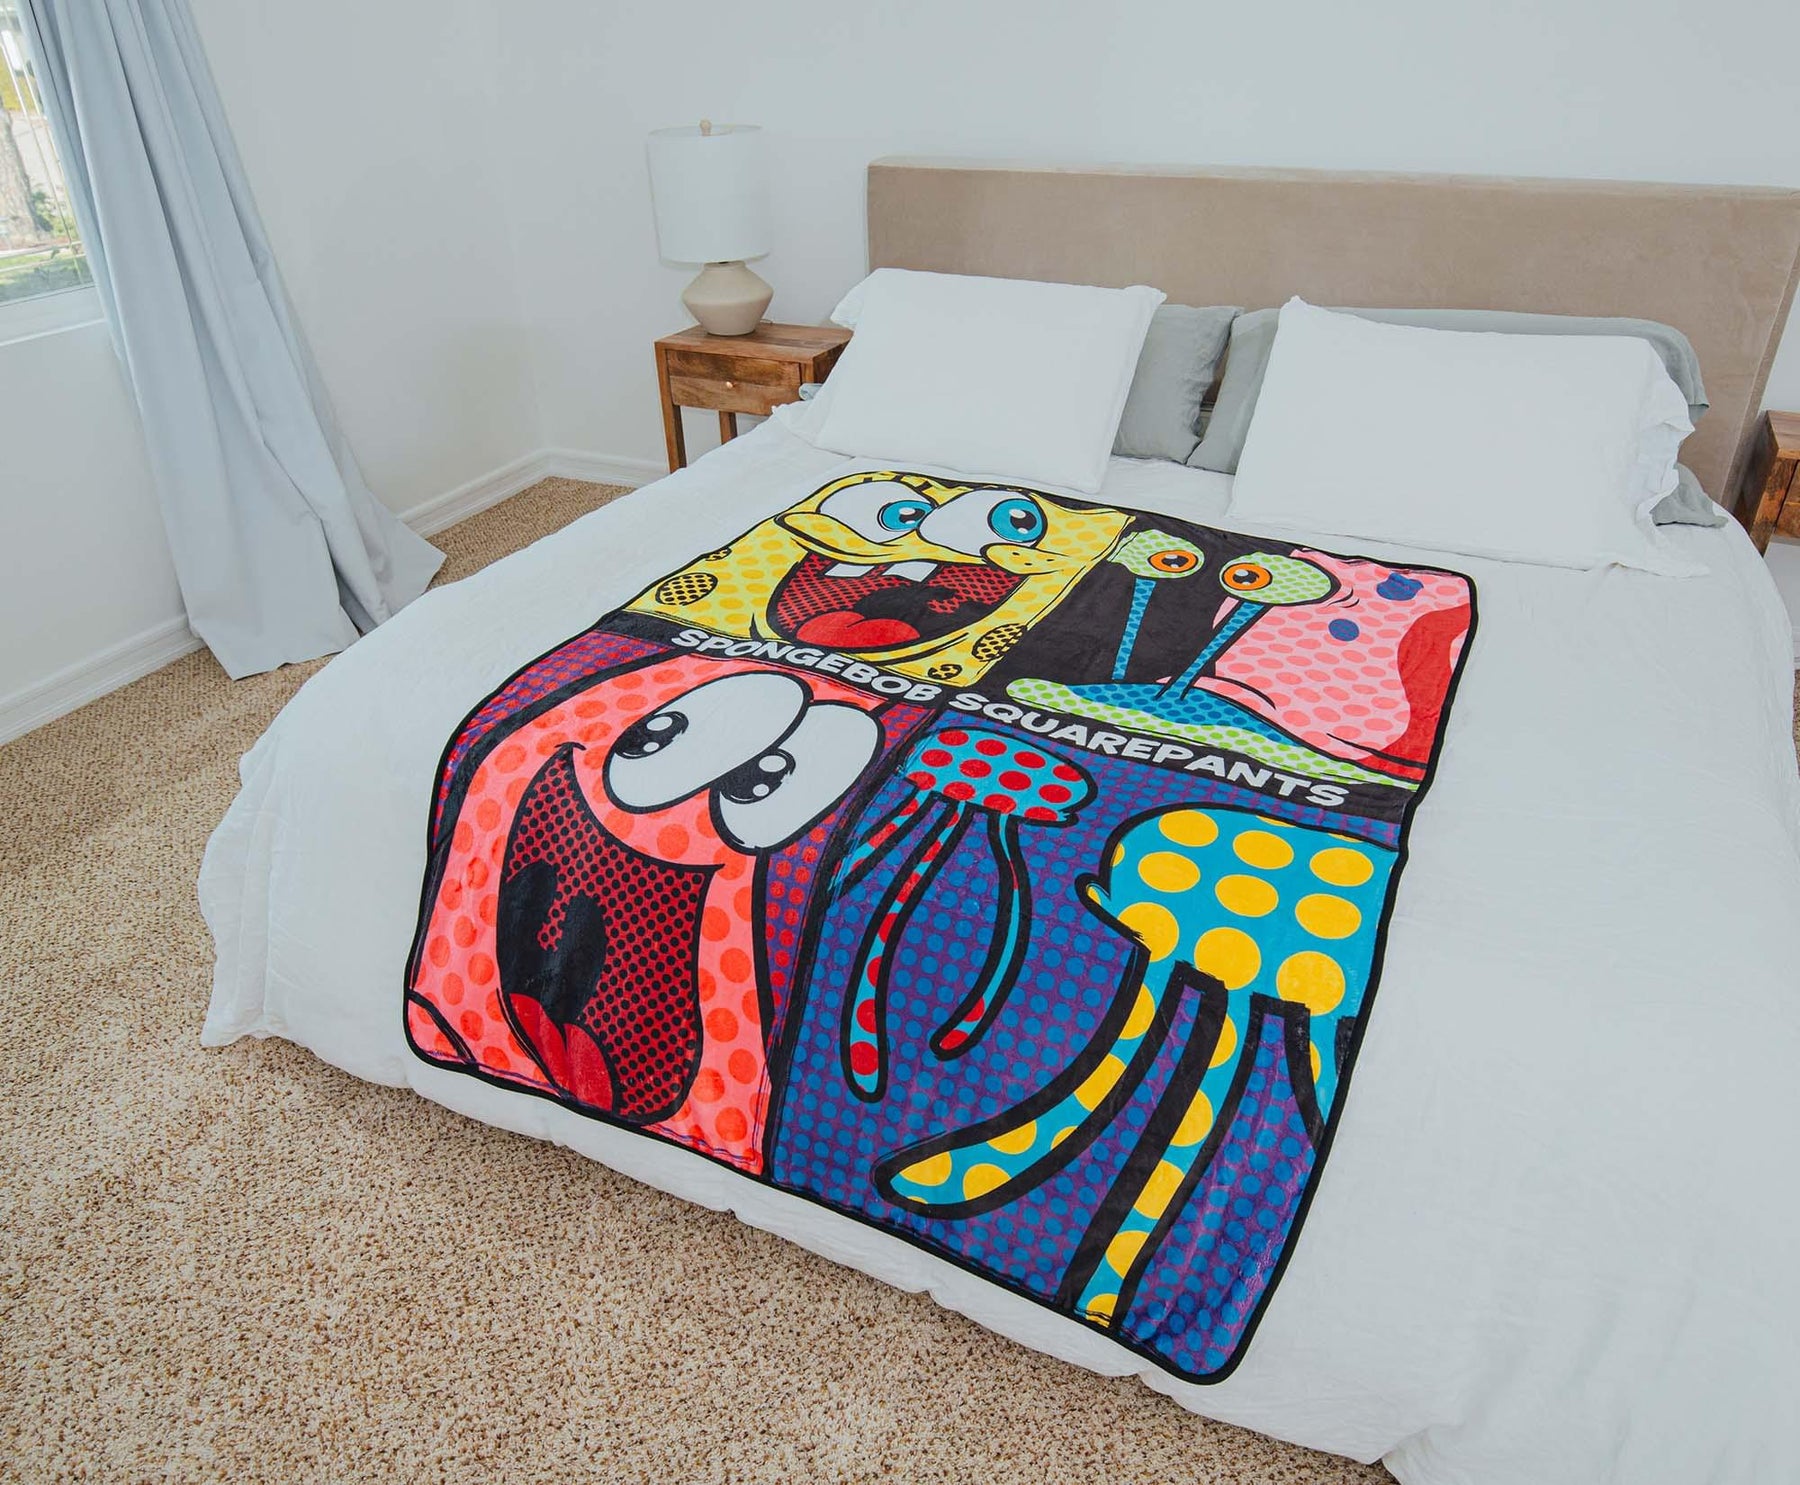 Nickelodeon SpongeBob SquarePants Character Grid Fleece Throw Blanket | 45 x 60 Inches